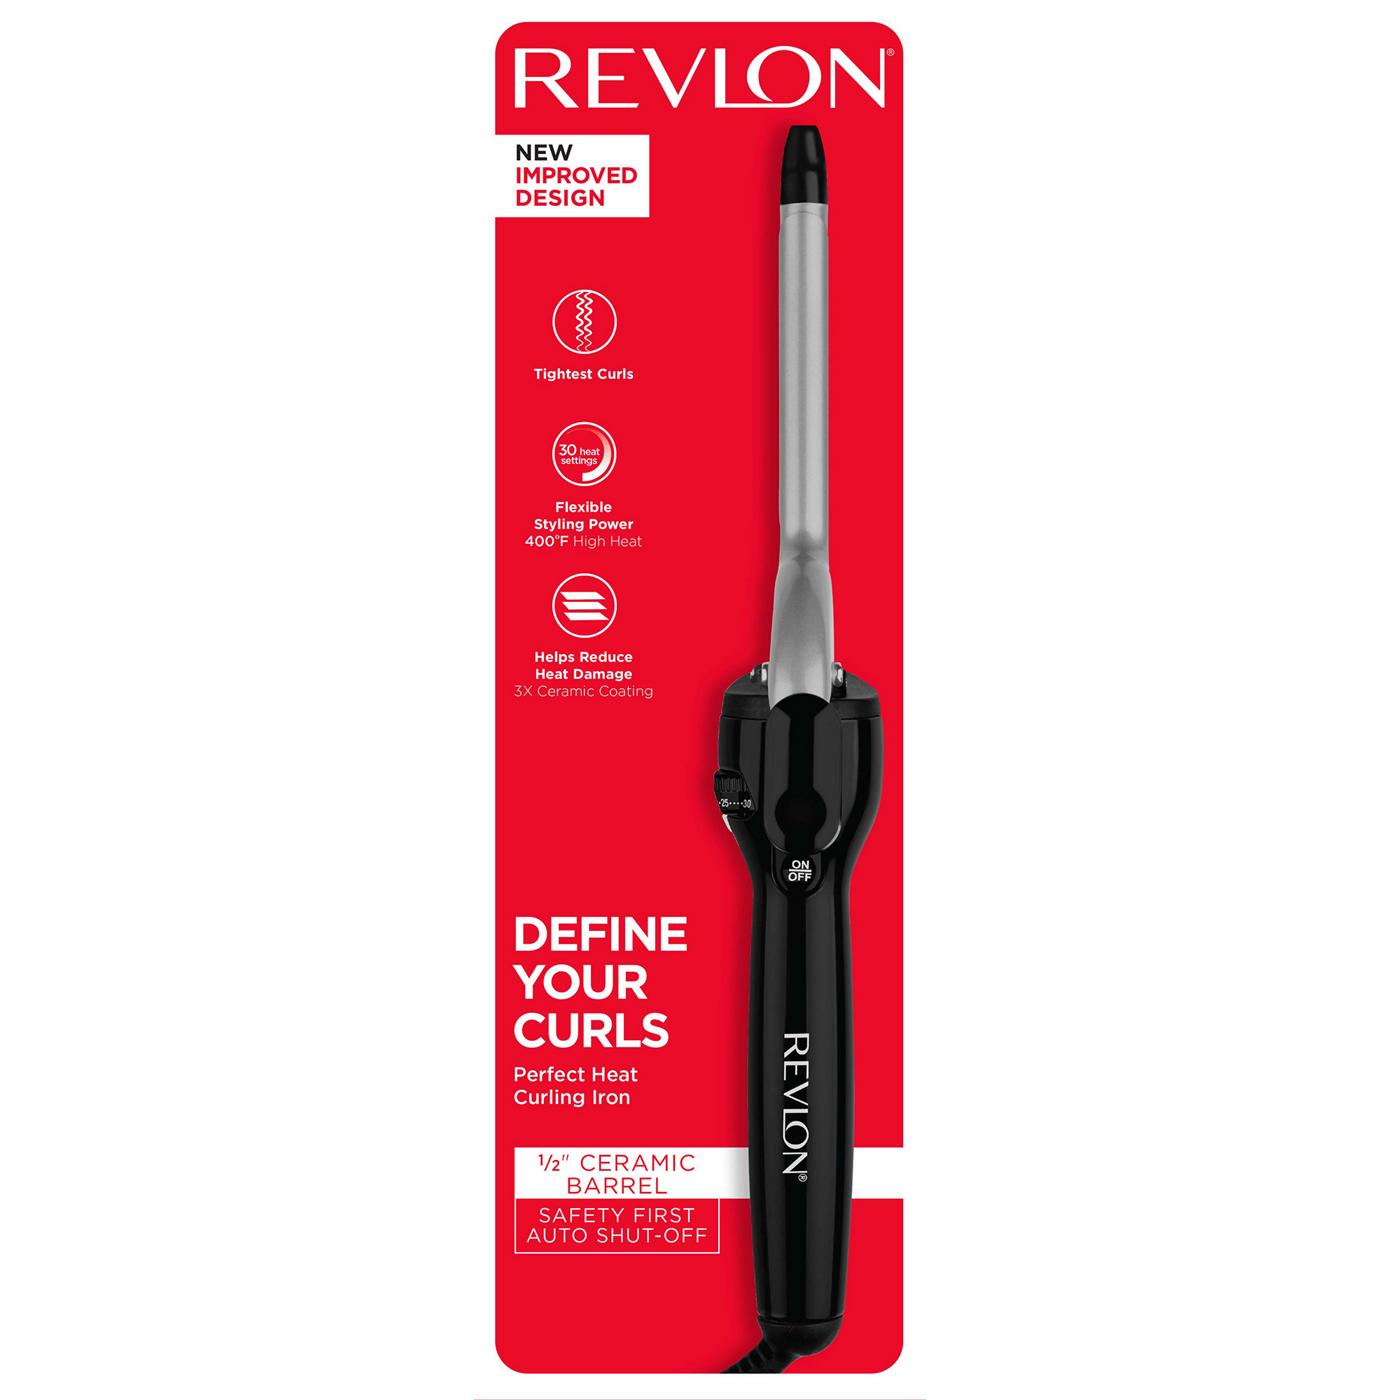 Revlon Ceramic Hair Curling Iron 1/2 in; image 1 of 6